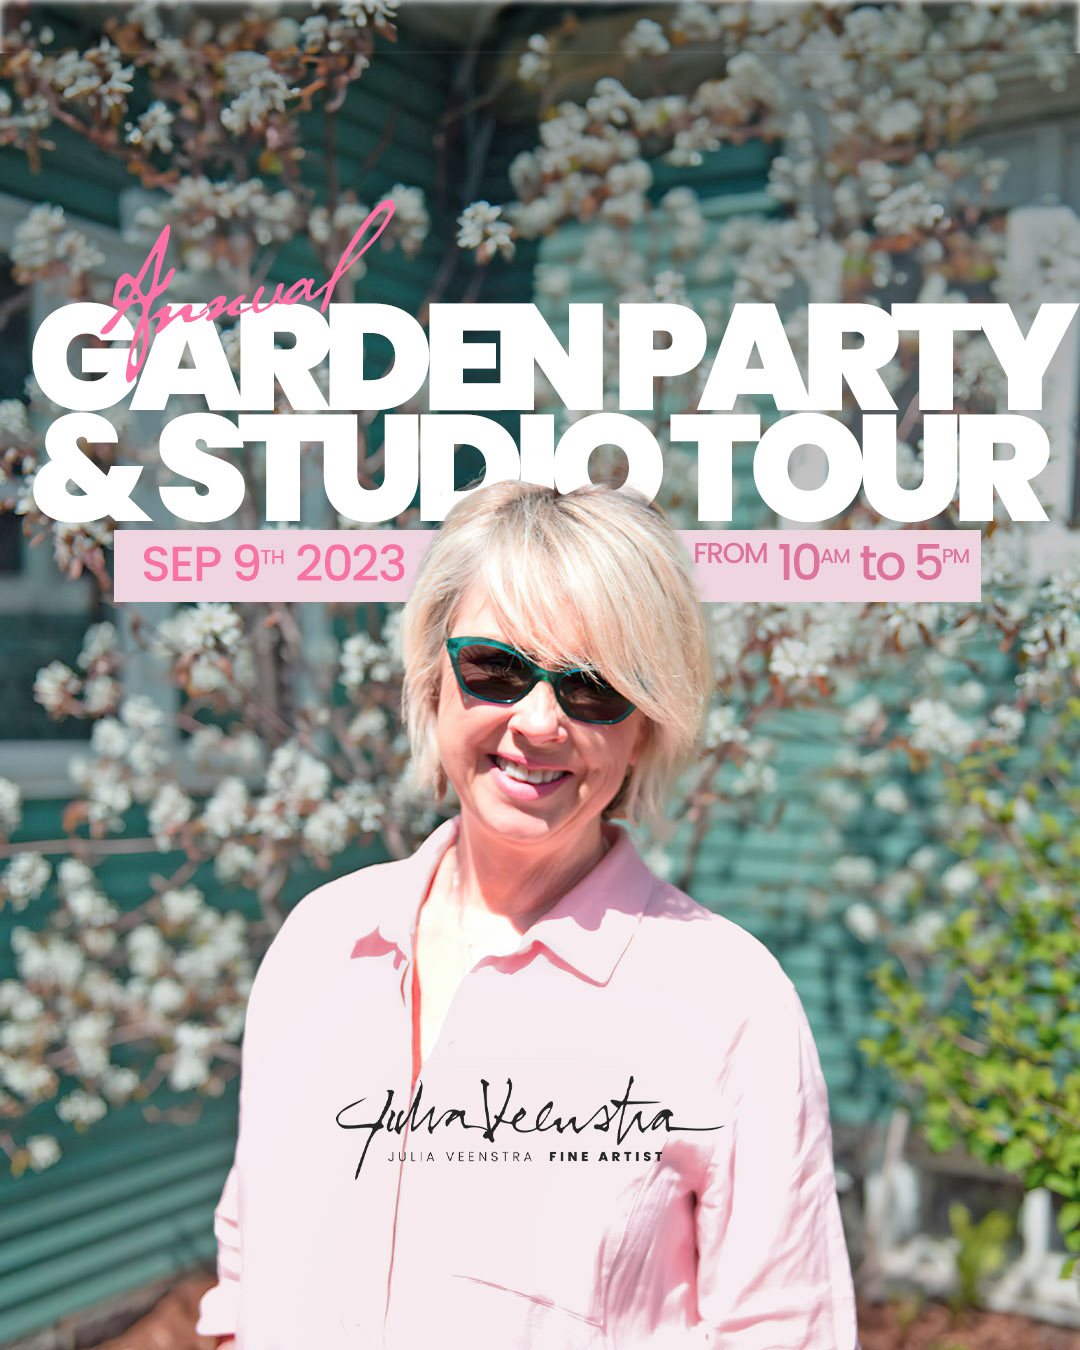 Sep 9th: Garden Party and Studio Tour!